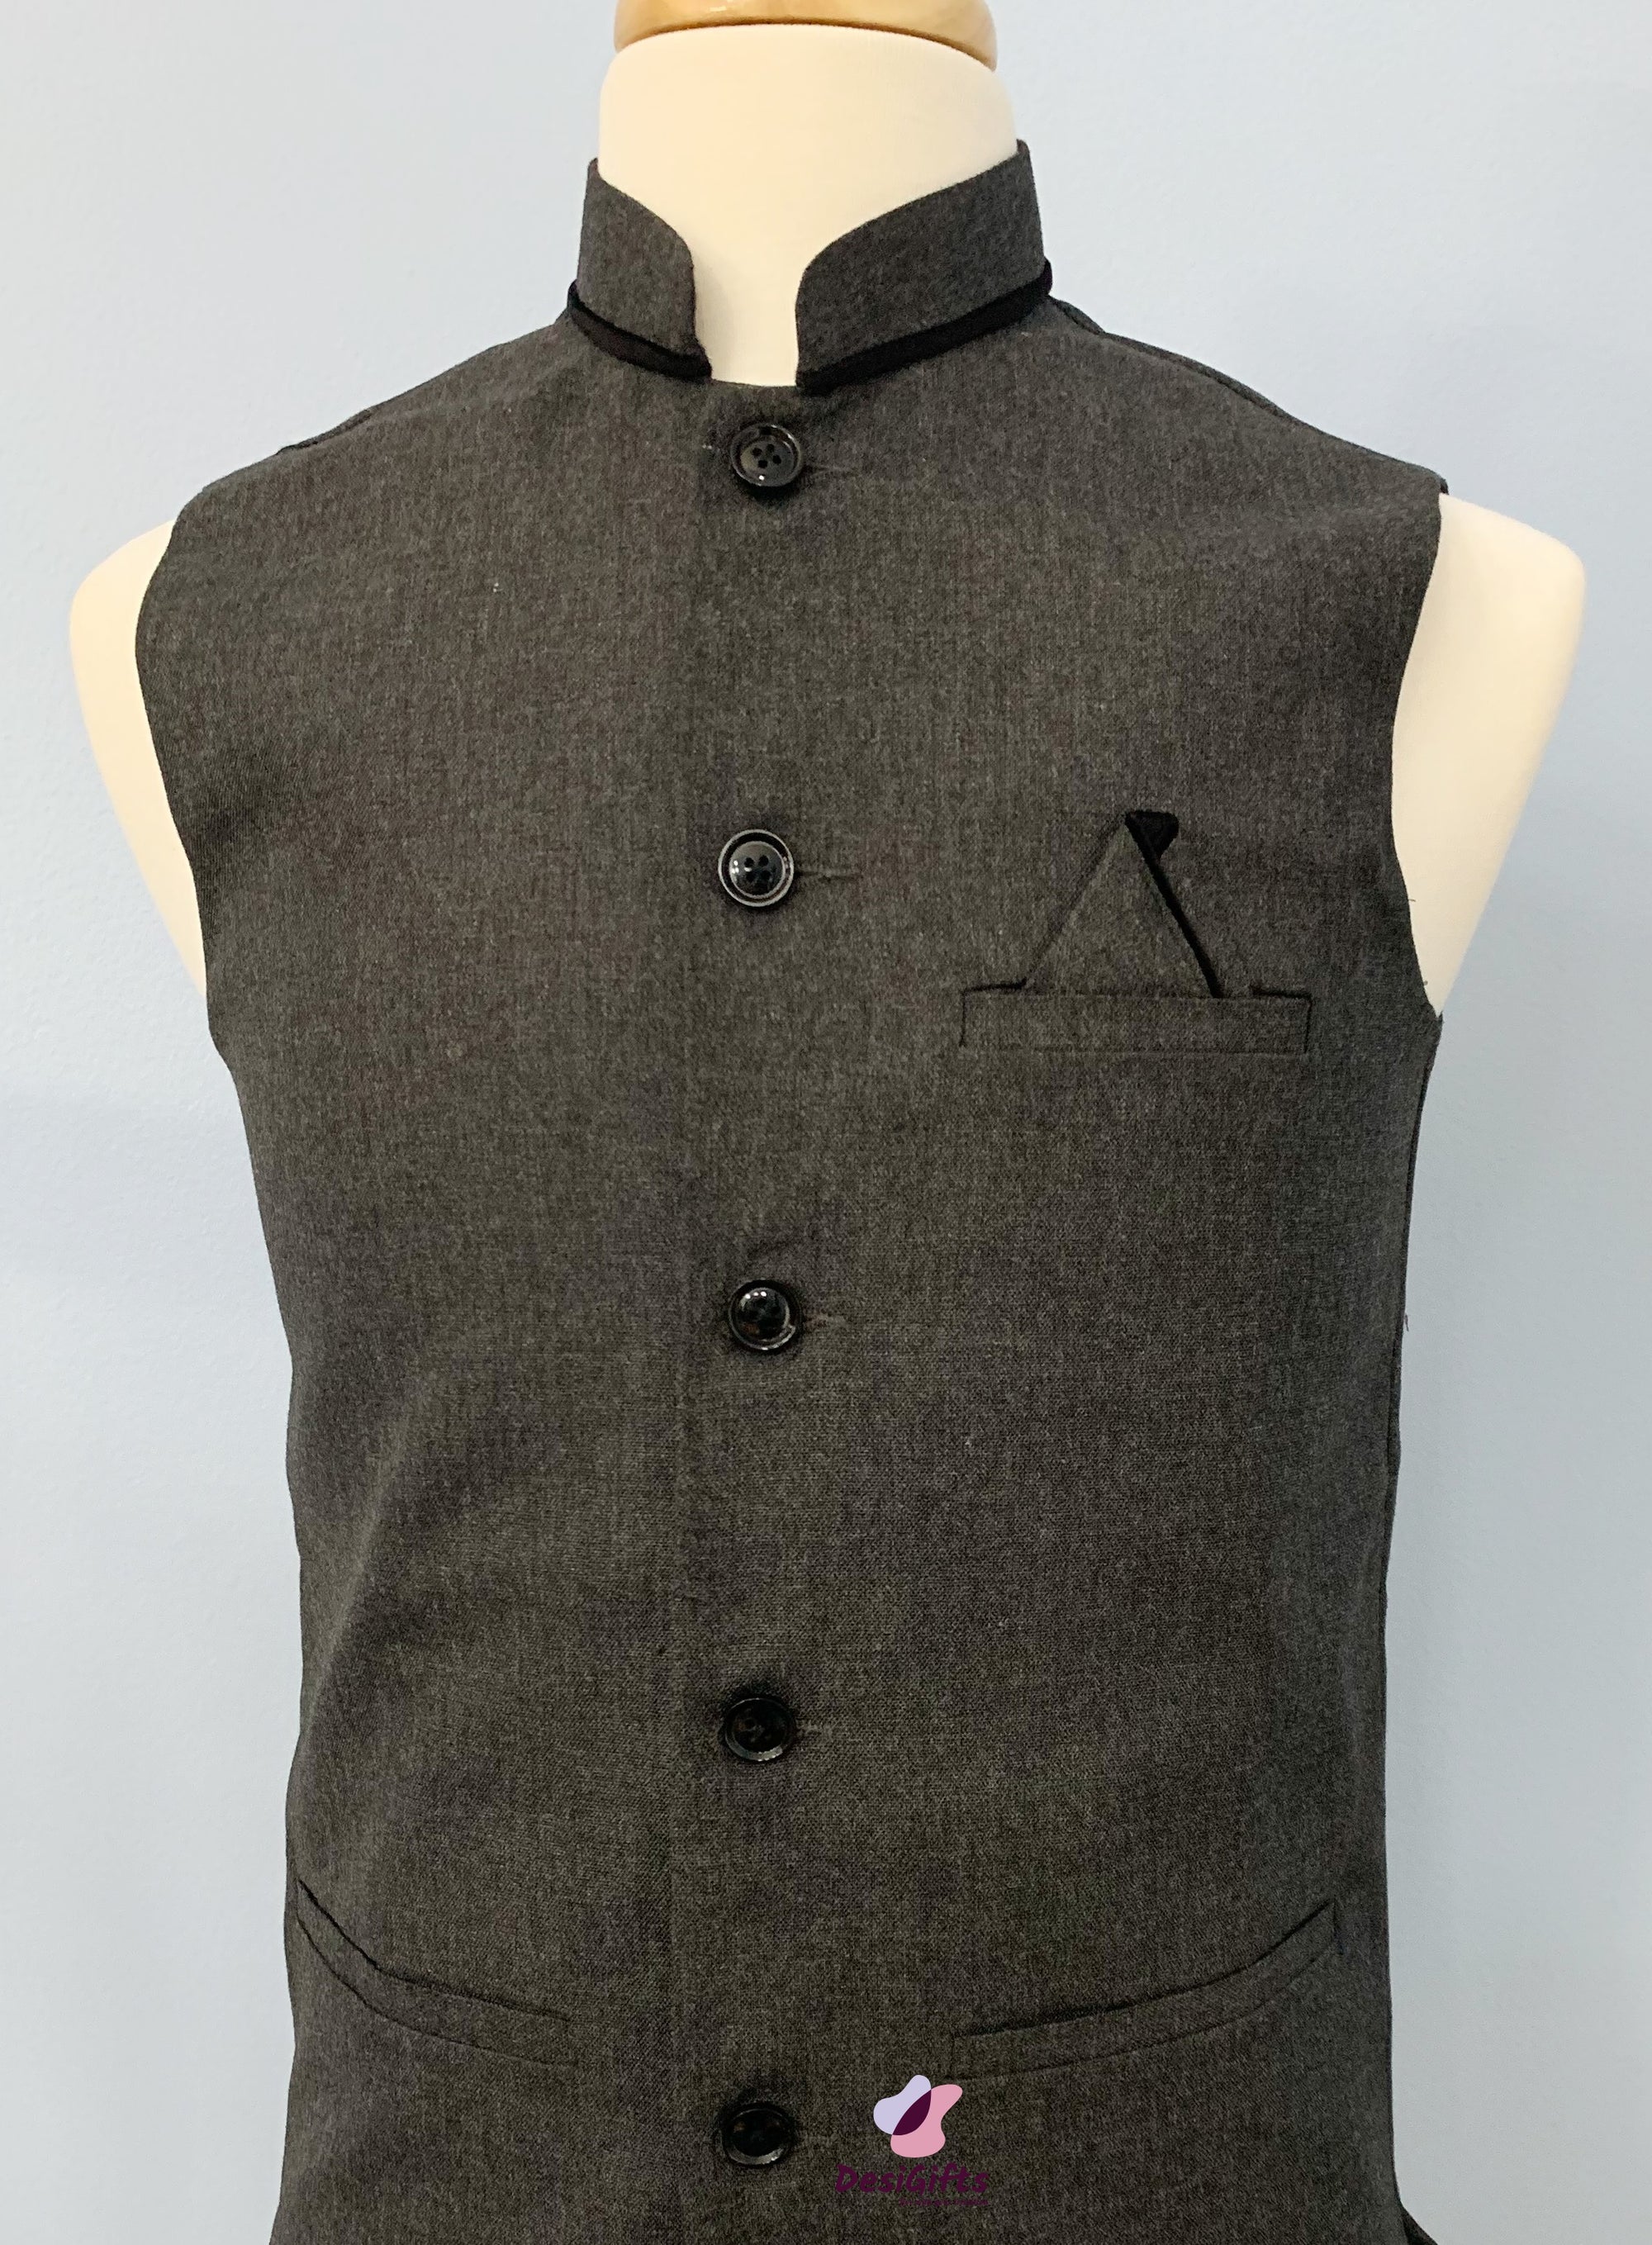 Woven Jute Cotton Nehru Style Jacket / Sadri-Design, MJ#BLK 361